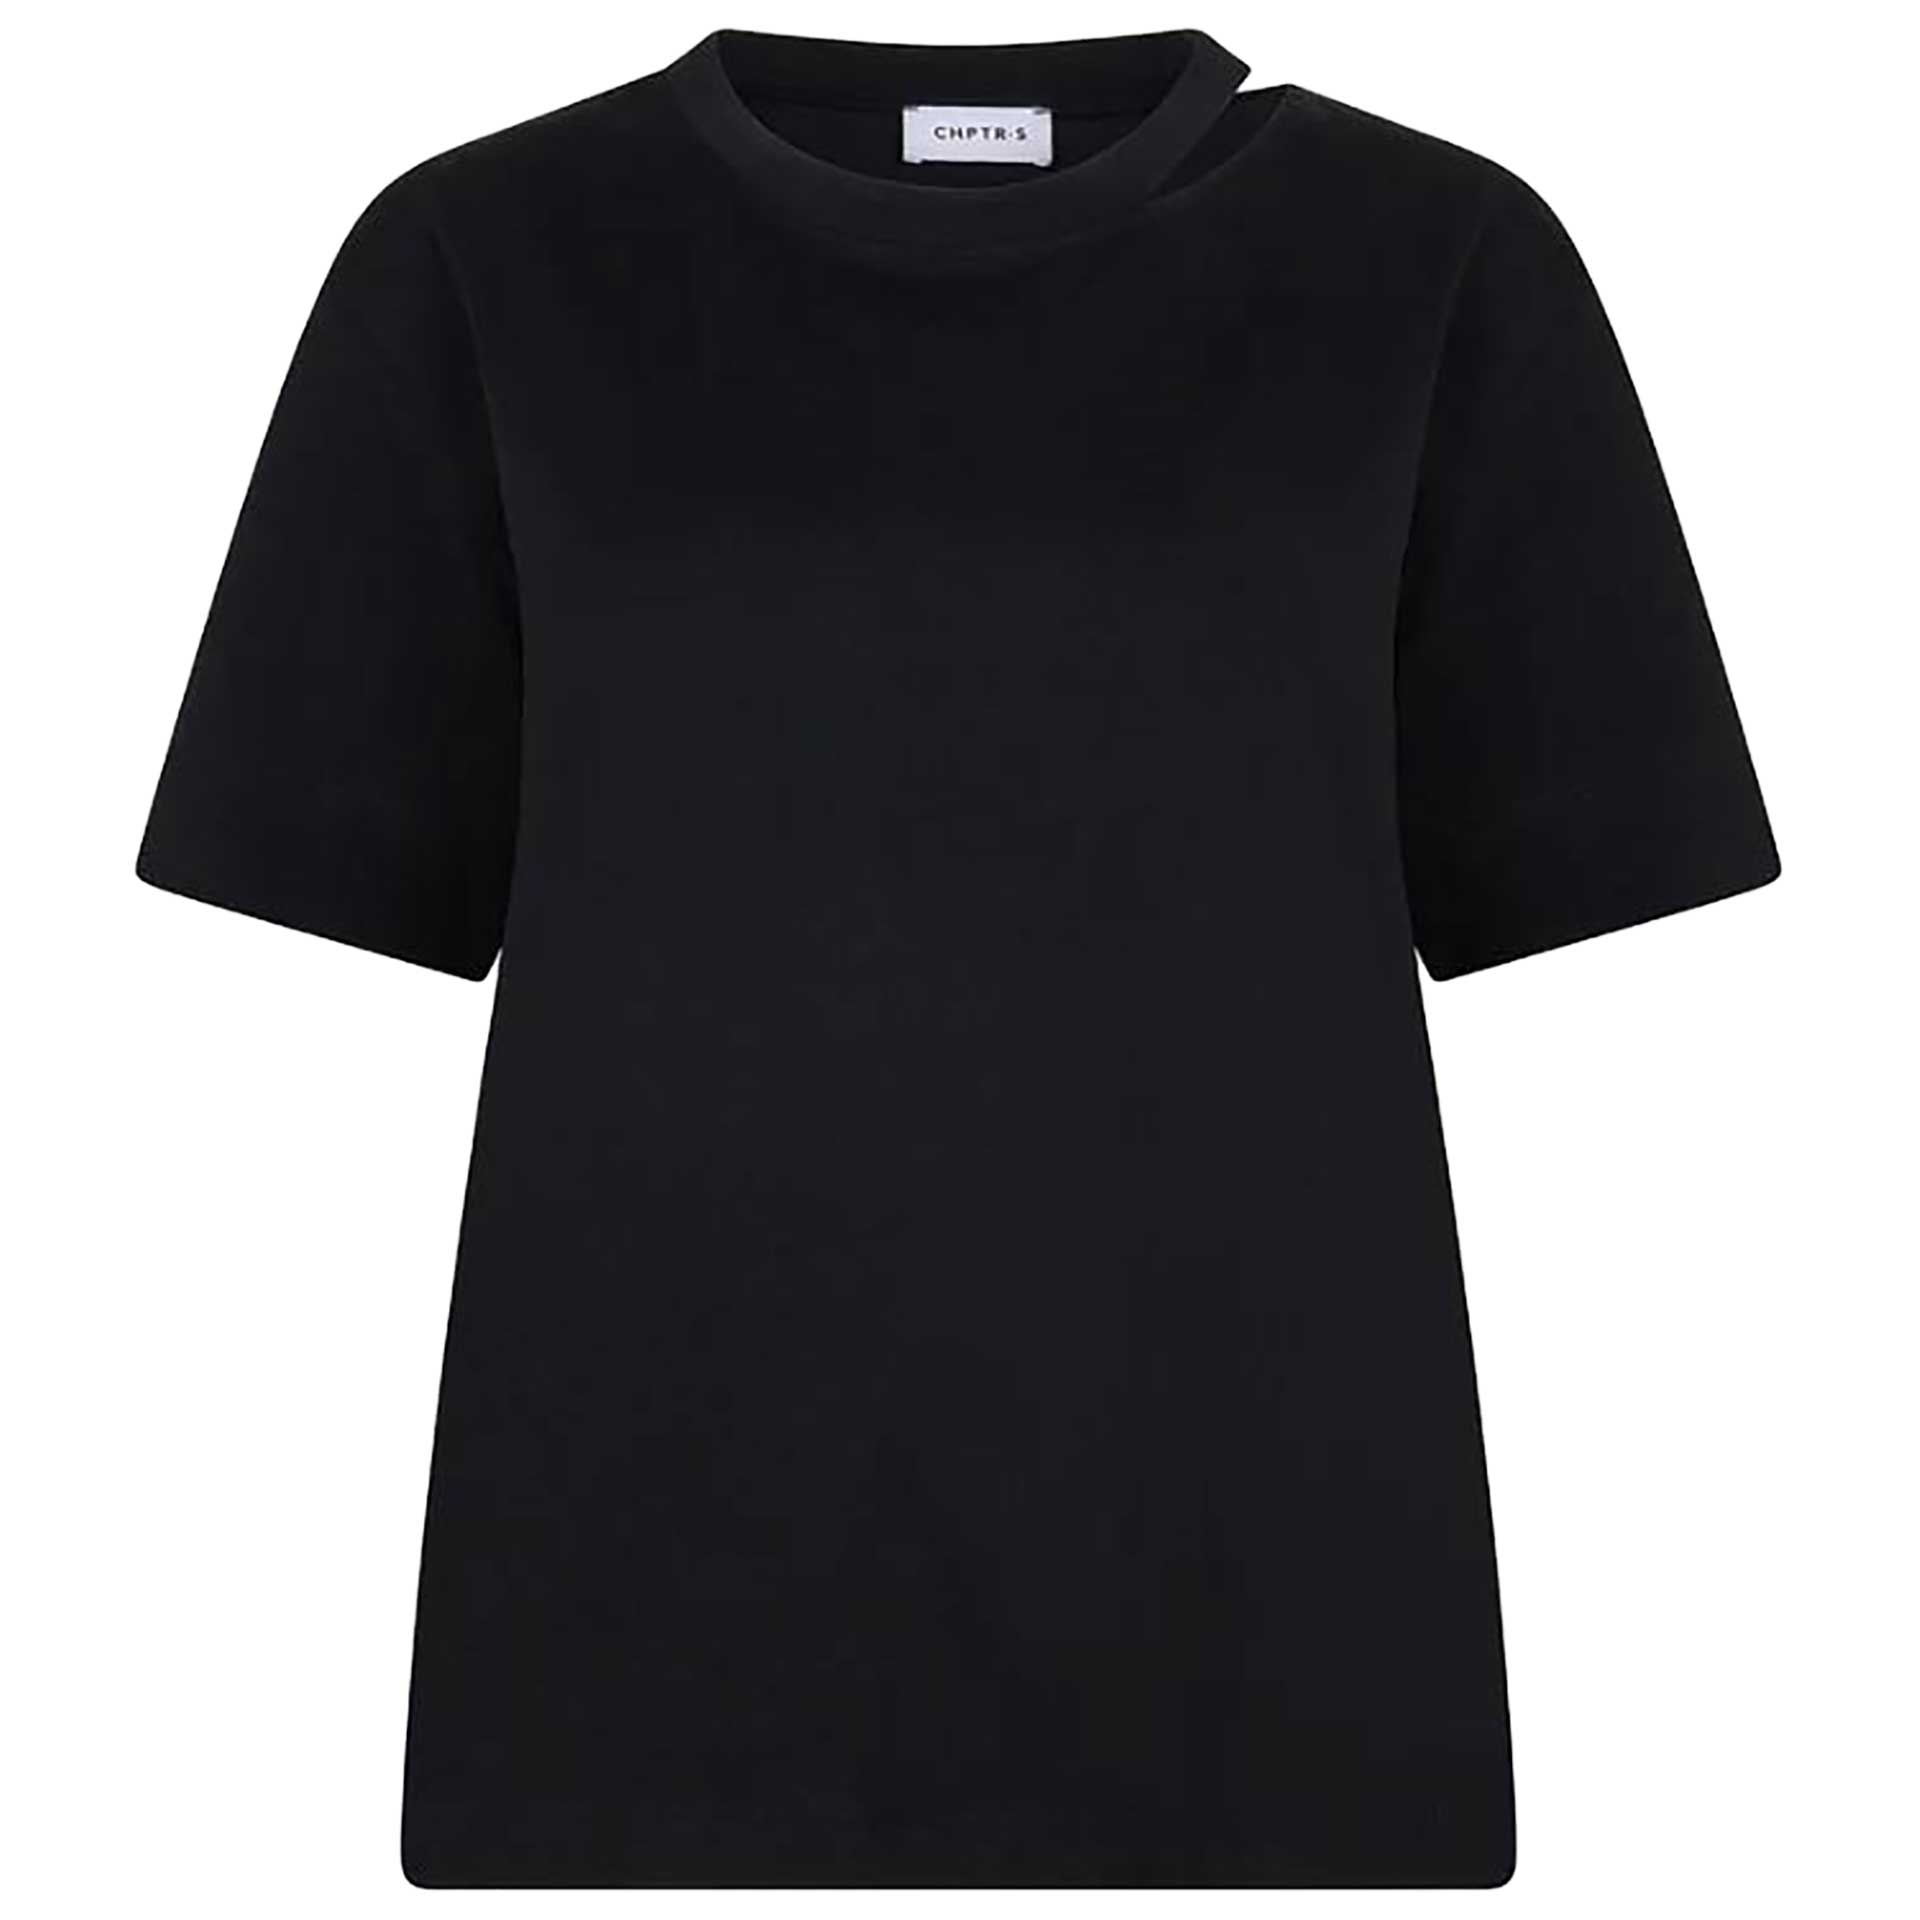 CHPTR-S T-shirt Sleek